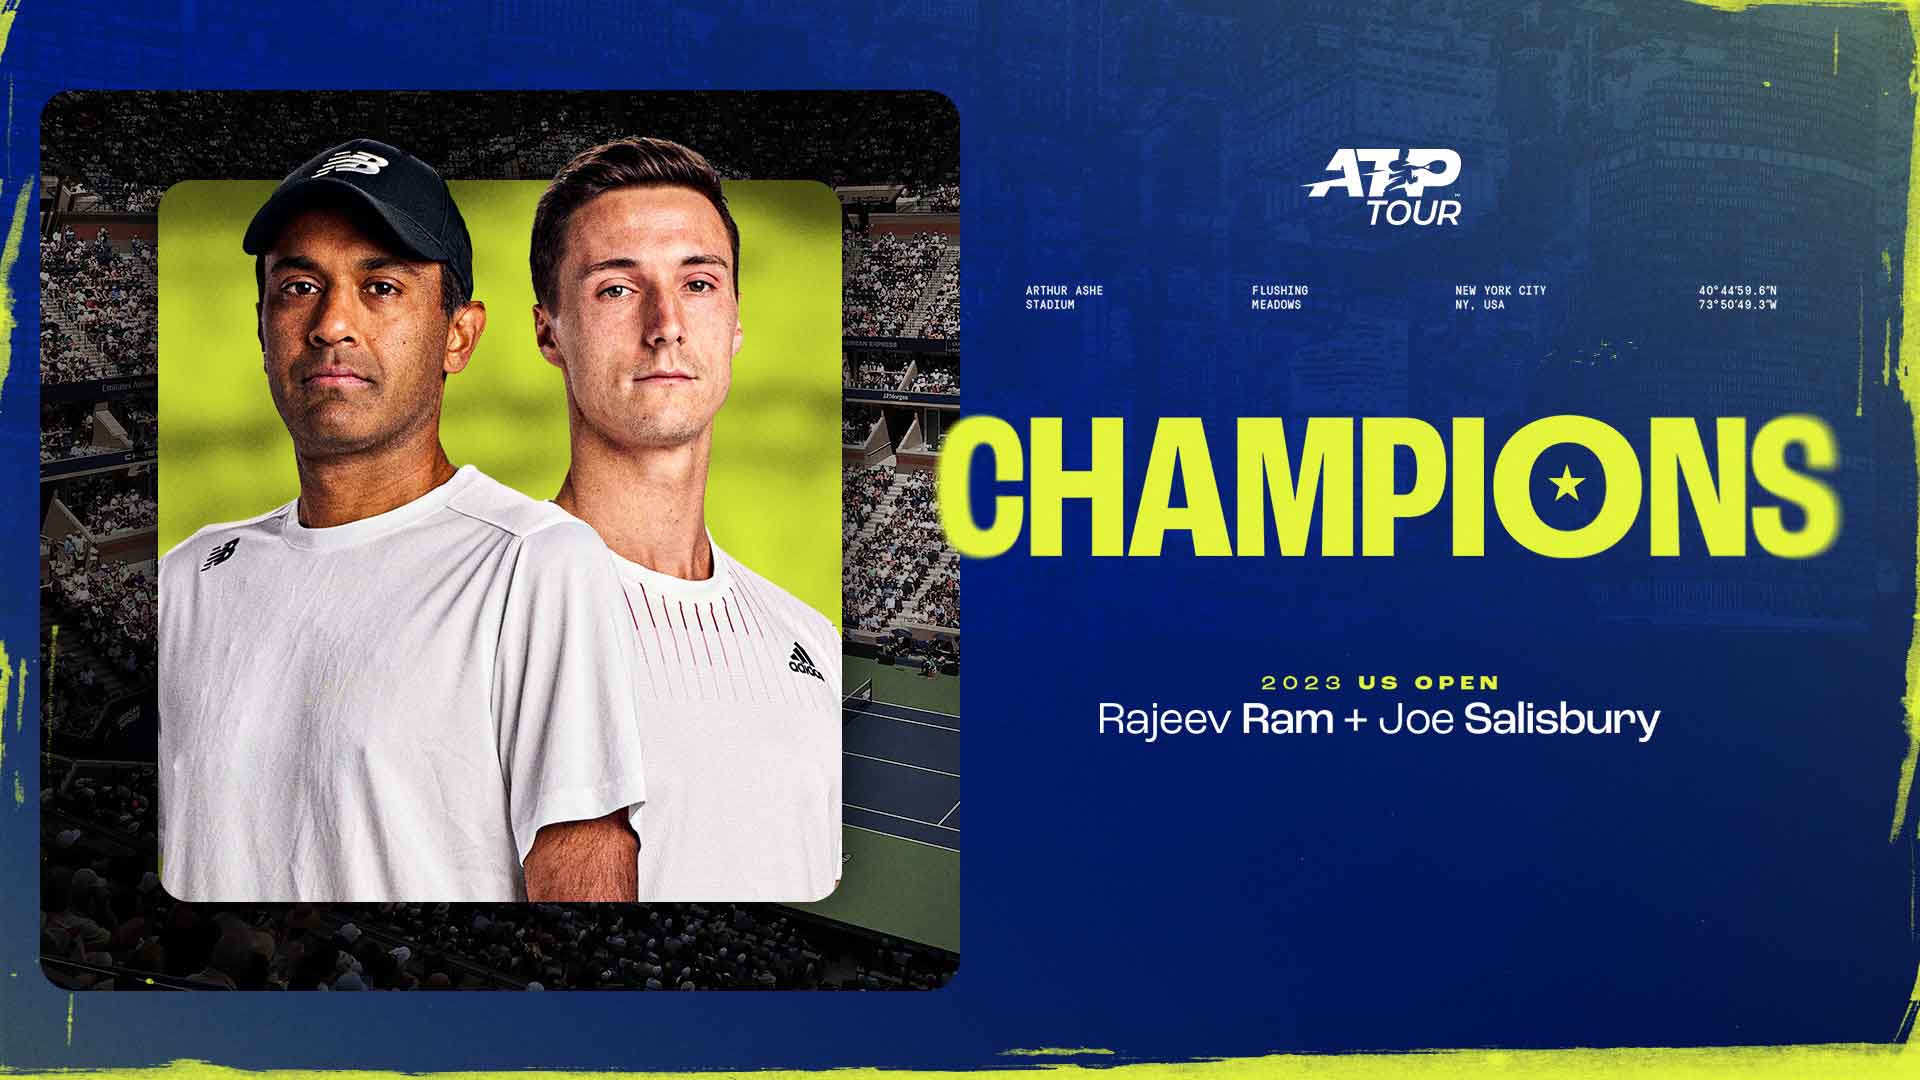 Rajeev Ram and Joe Salisbury win the 2023 US Open doubles title.